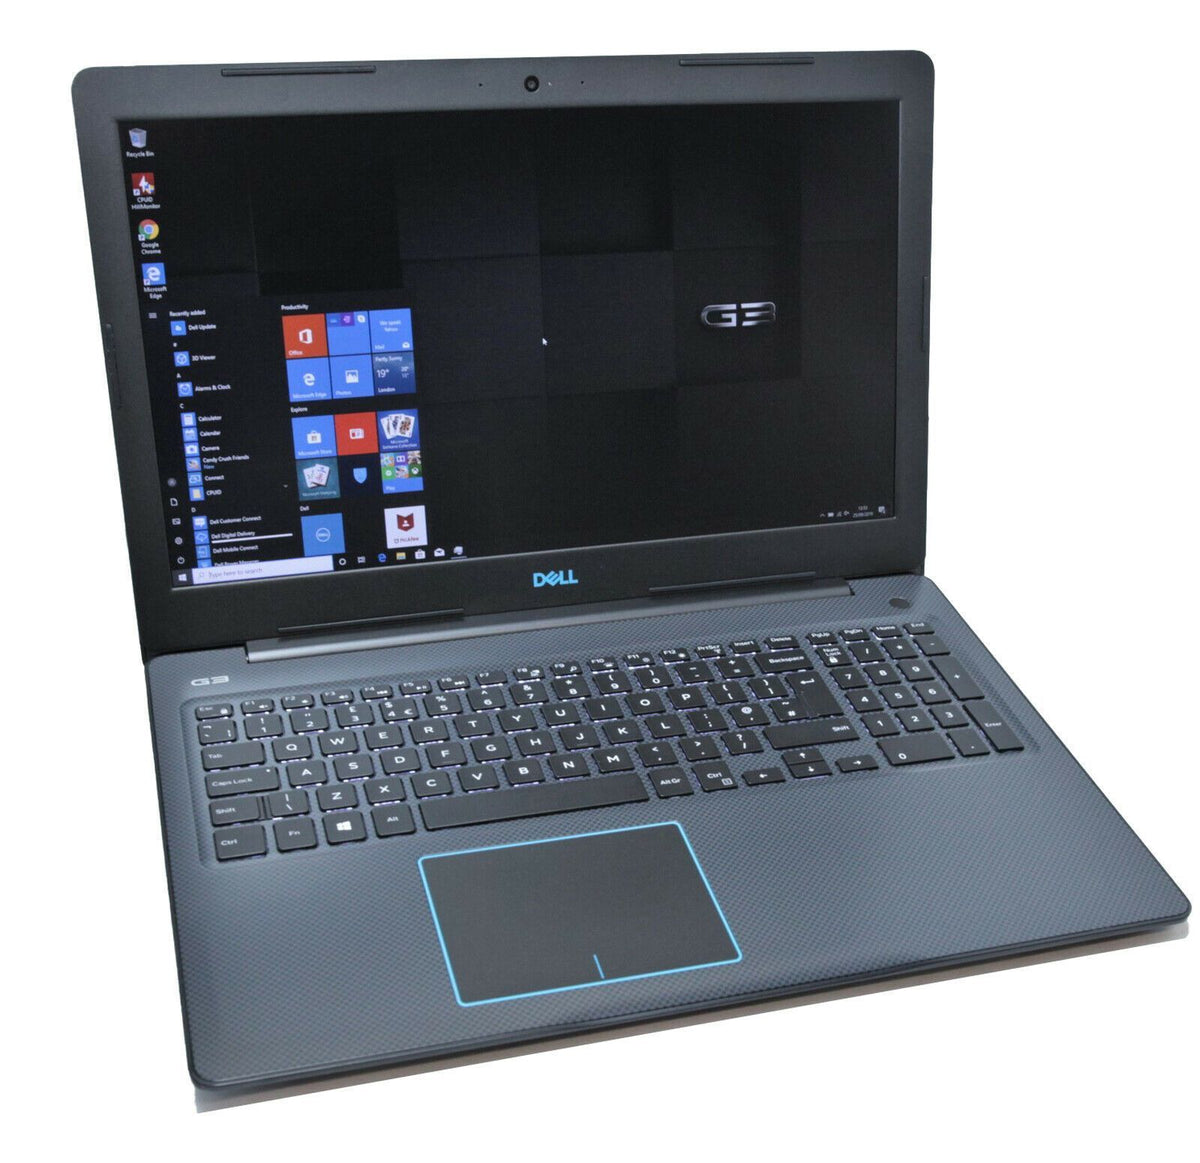 Dell G3 15 IPS Gaming Laptop: Core i7-8750H, GTX 1060 Max-Q, 256GB+1TB